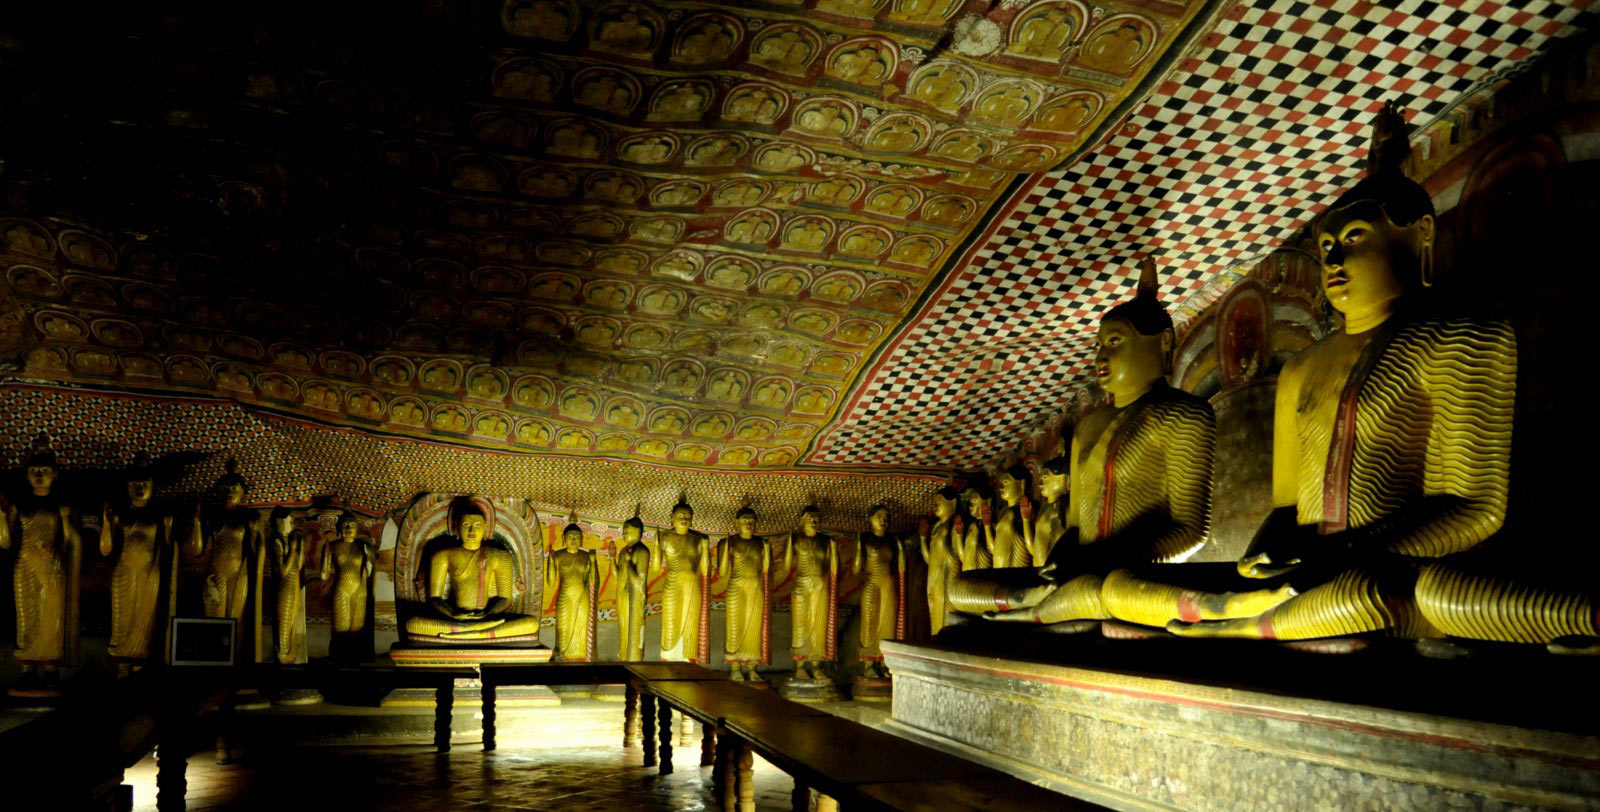 Dambulla historical cave temple in Sri Lanka